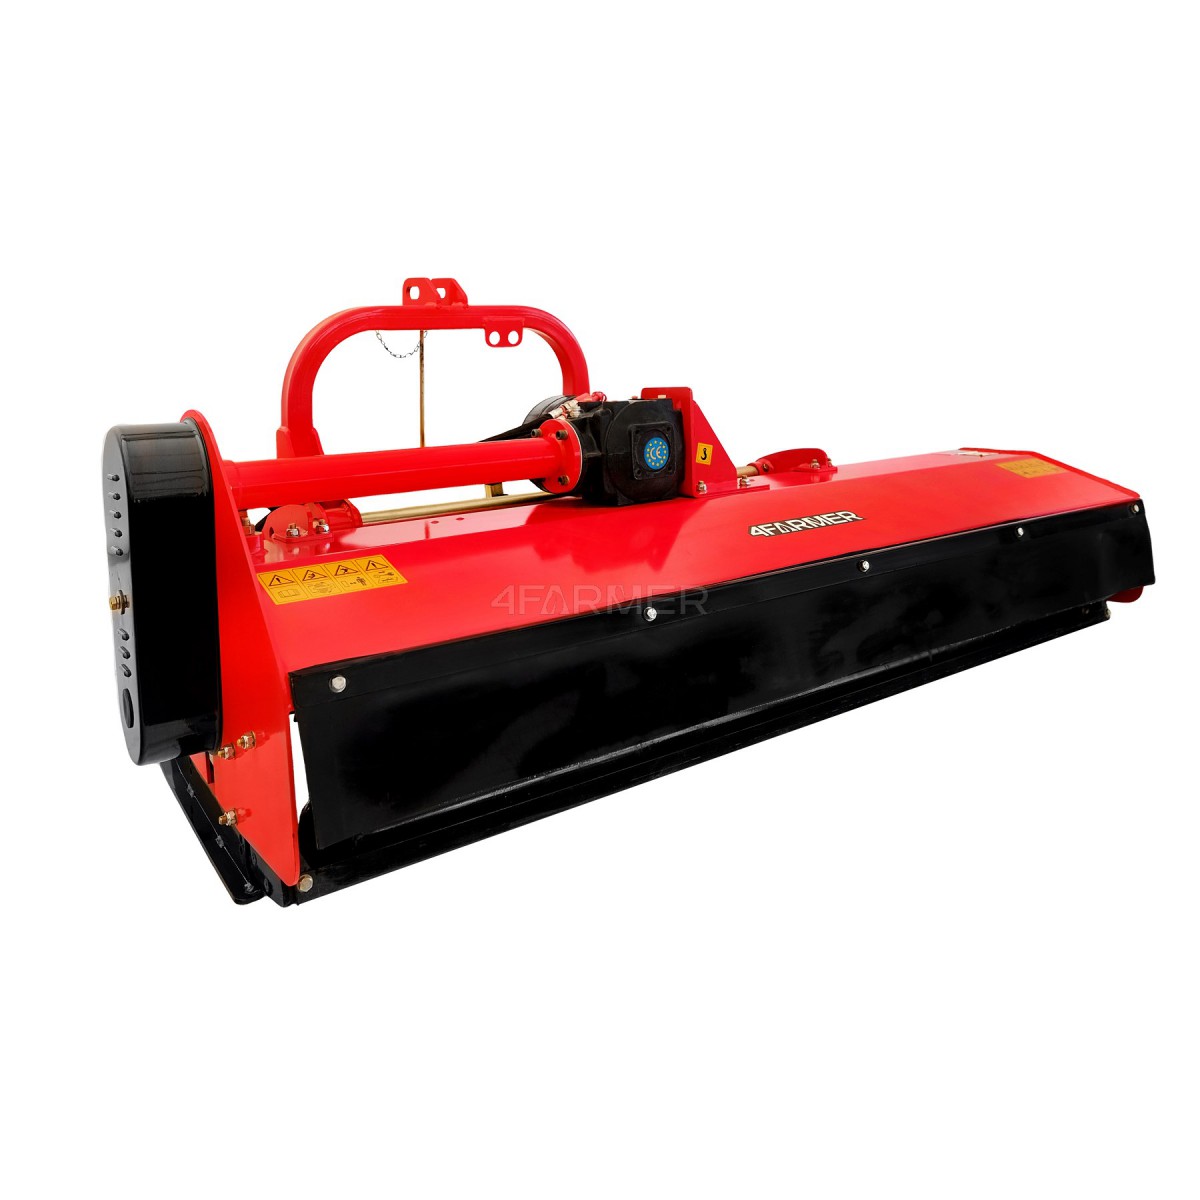 Flail mower with hydraulic shift DPH 175 4FARMER